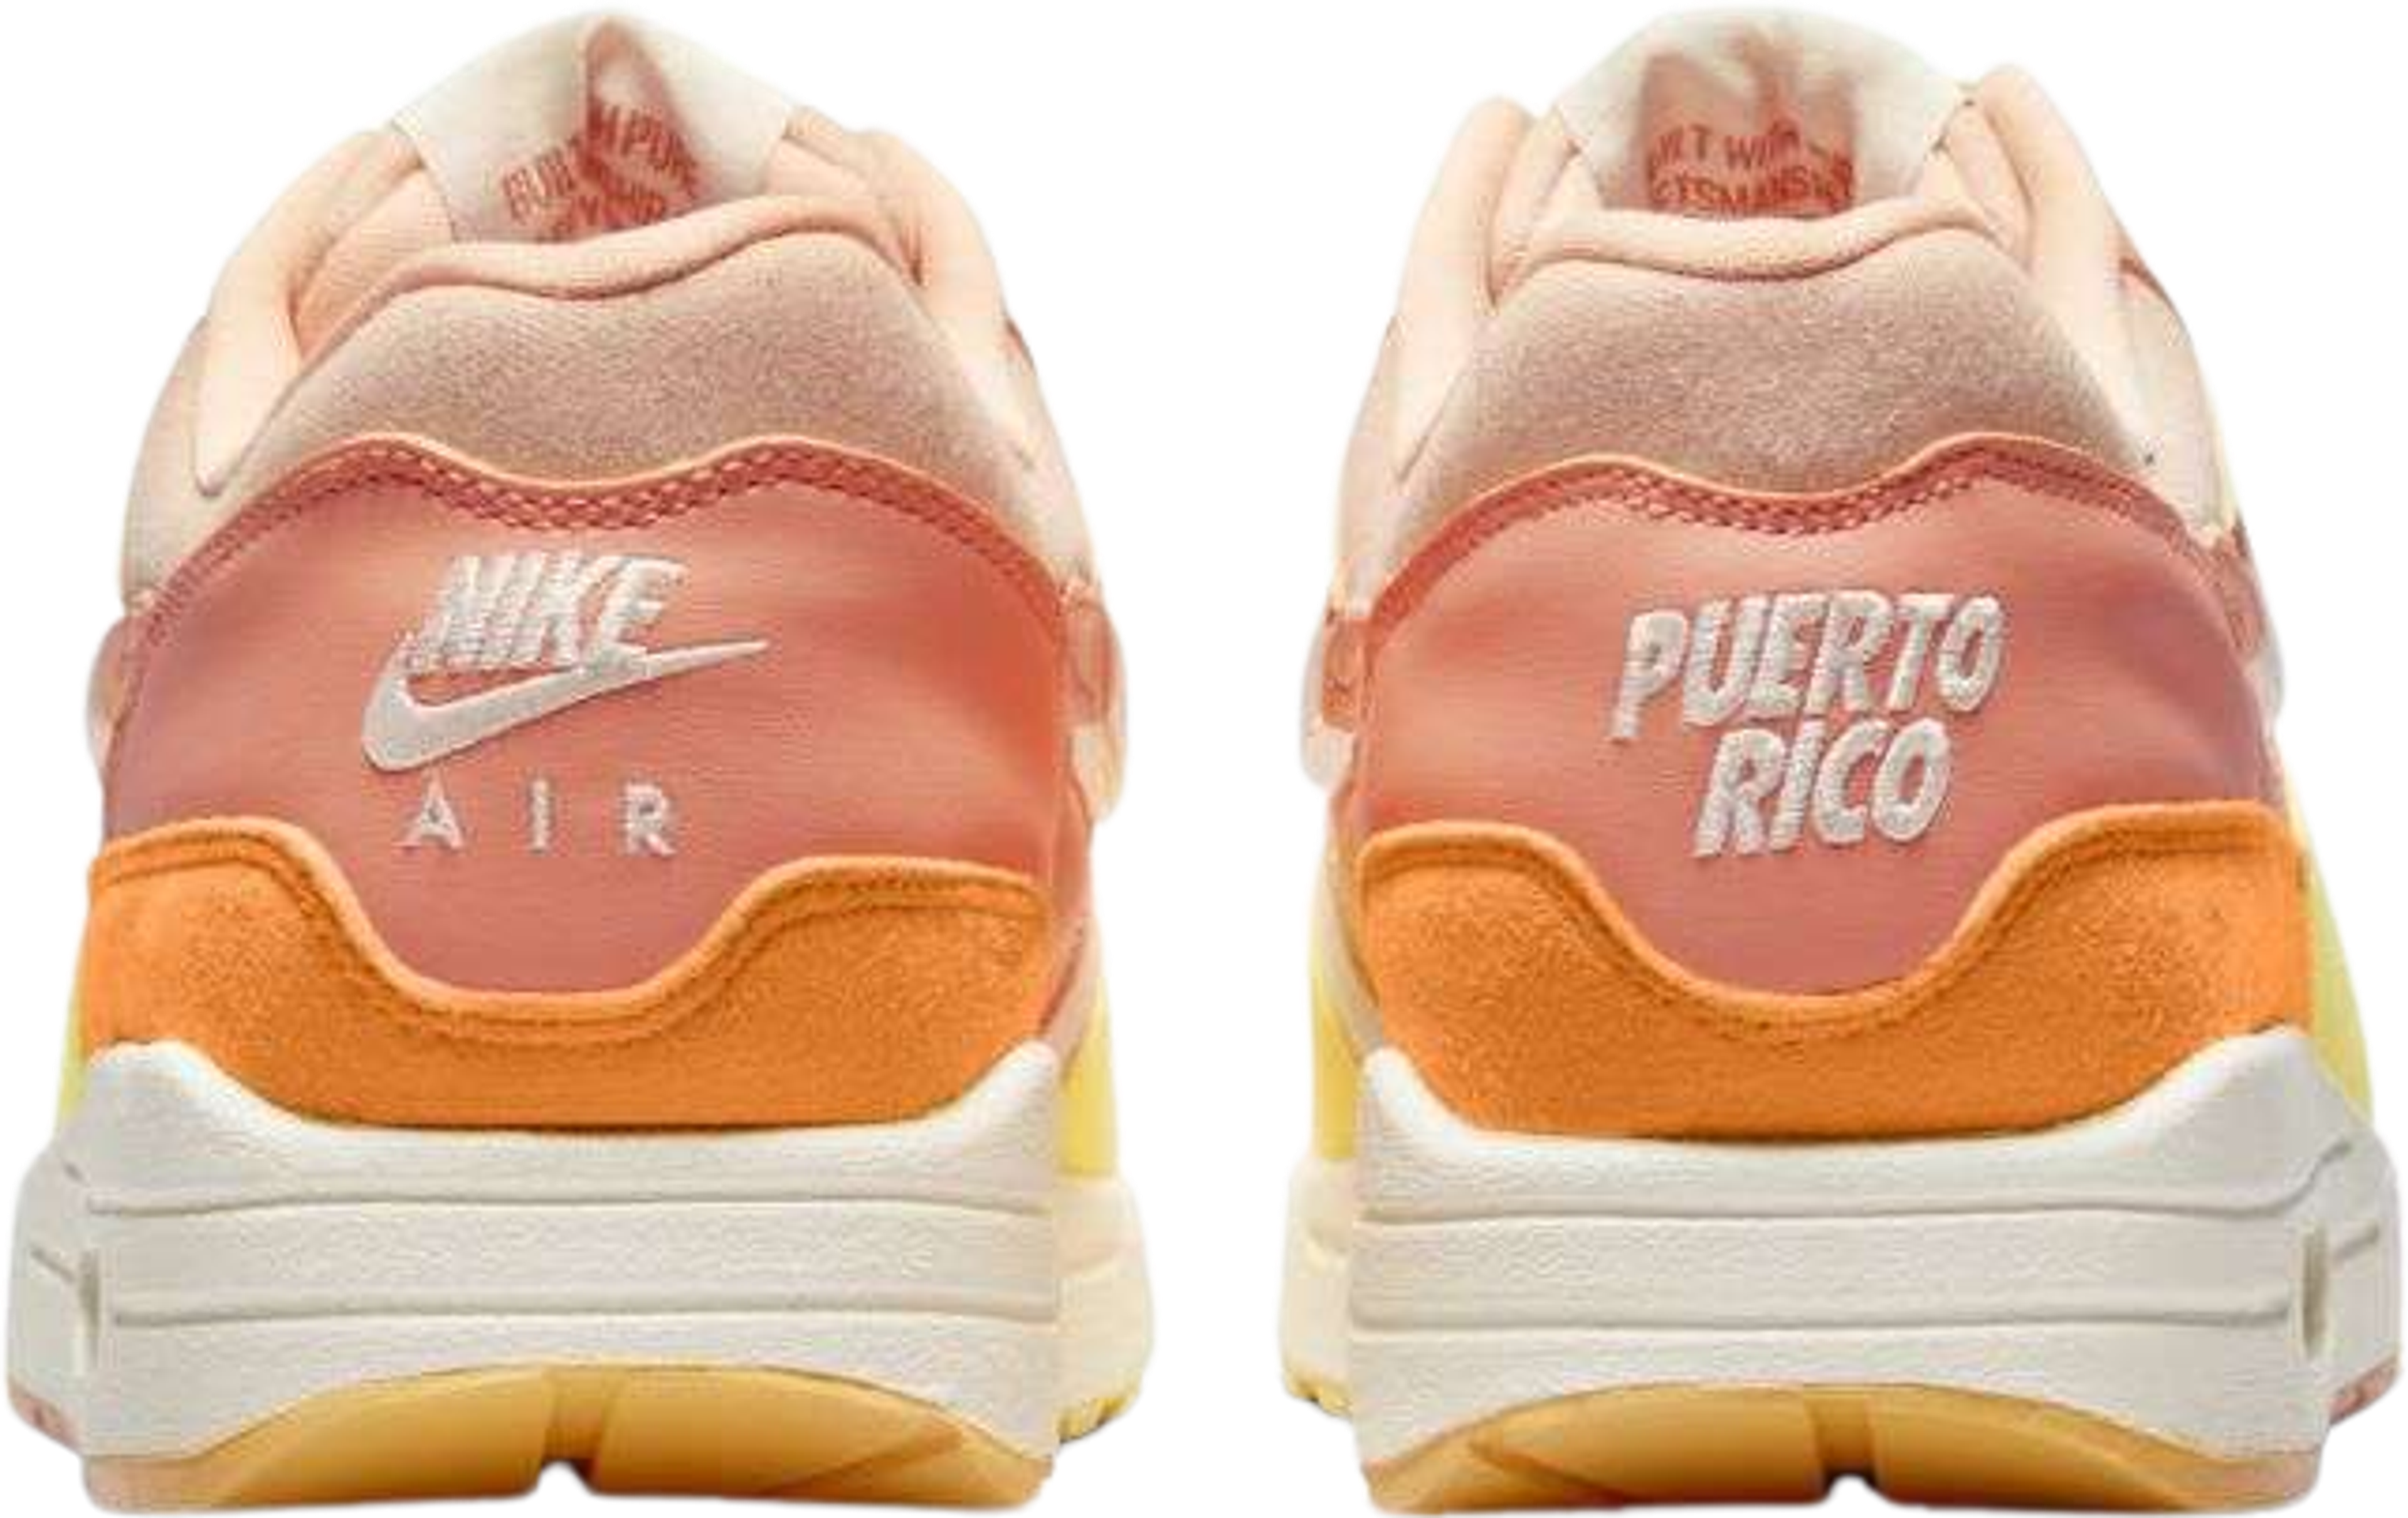 Nike Air Max 1 Puerto Rico Orange Frost